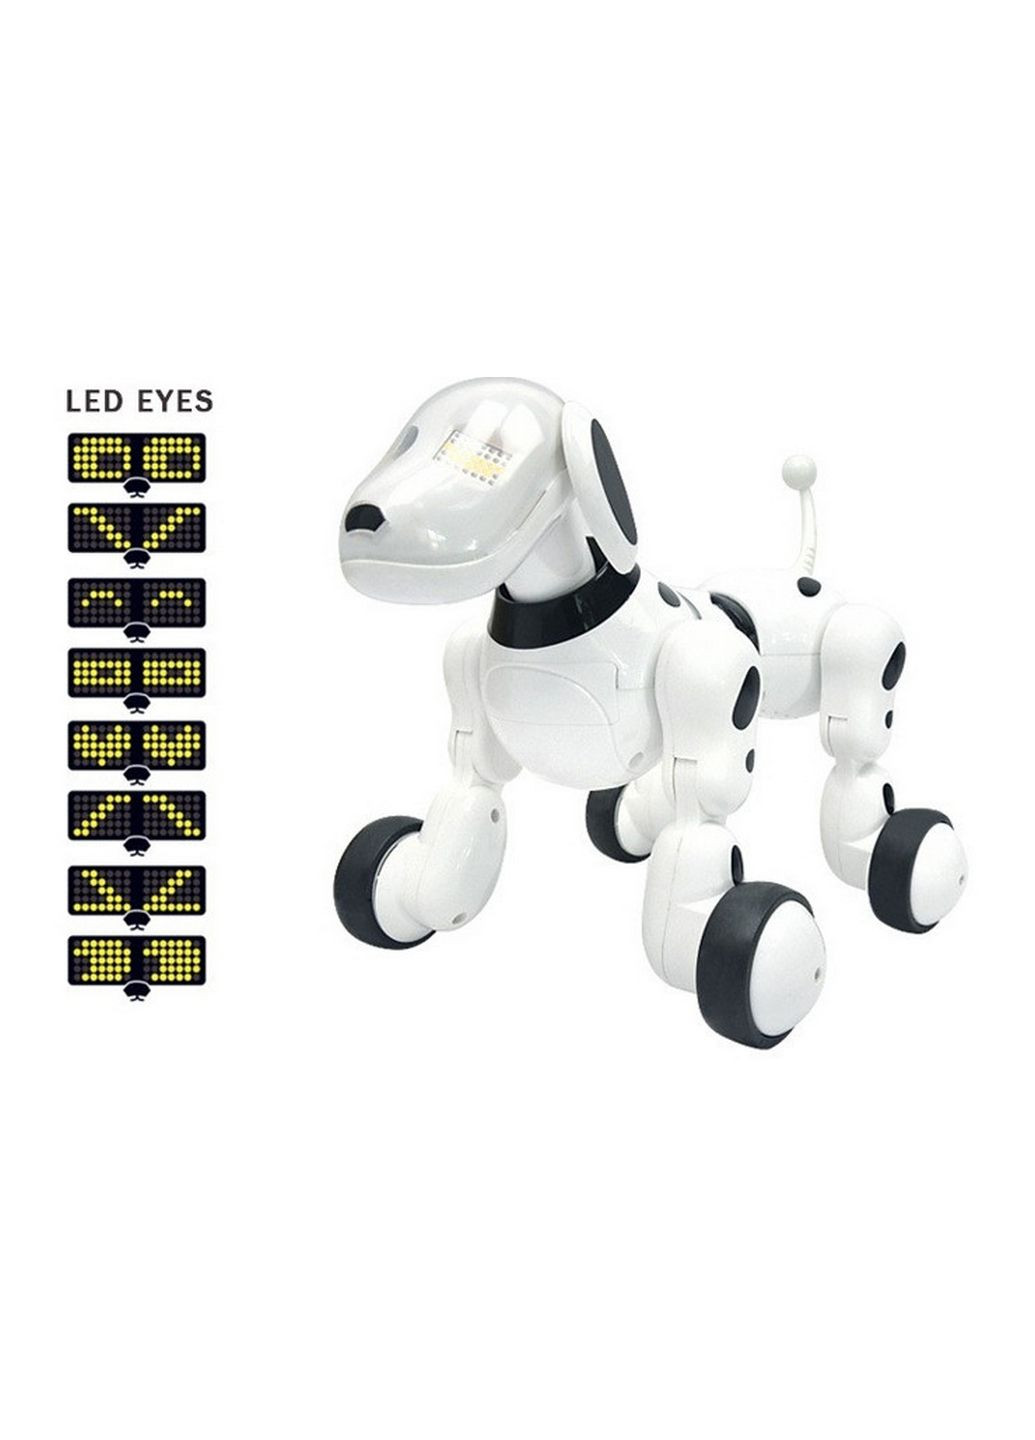 Робот-собака на радиоуправлении на аккумуляторе Metr+ (282583748)